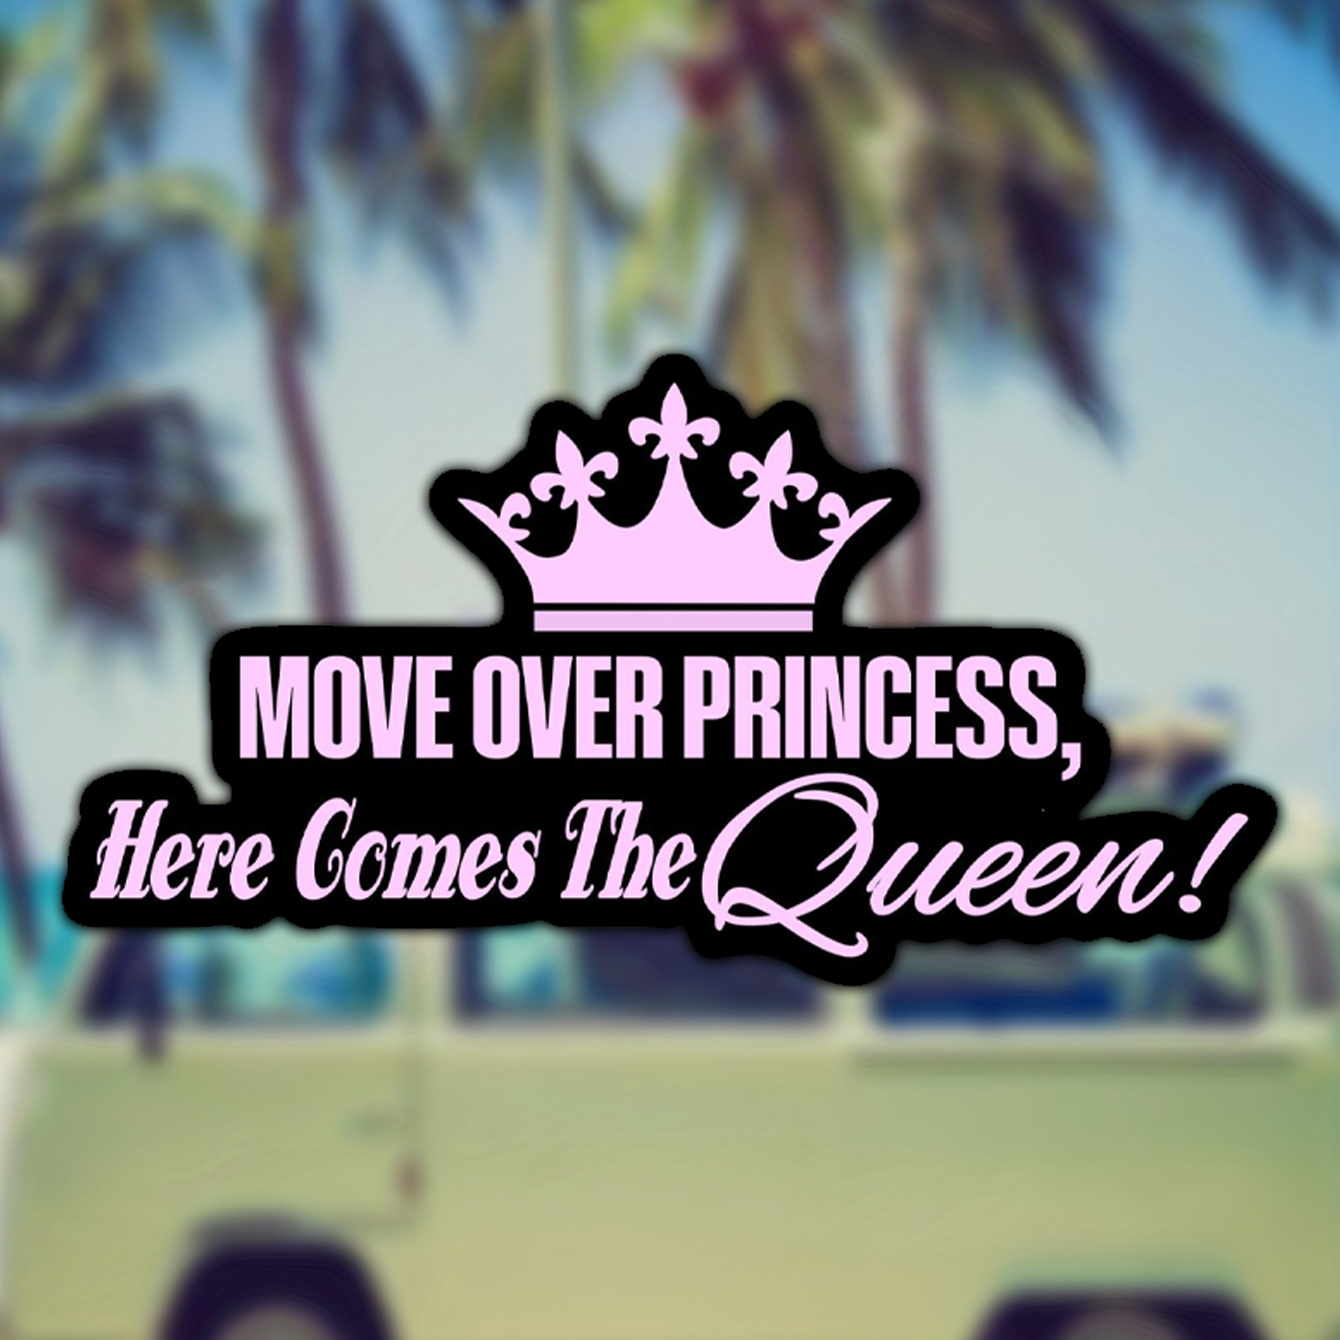 

Move Over Princess! Funny Joke Cute Girl Car Truck Vinyl Sticker Decal